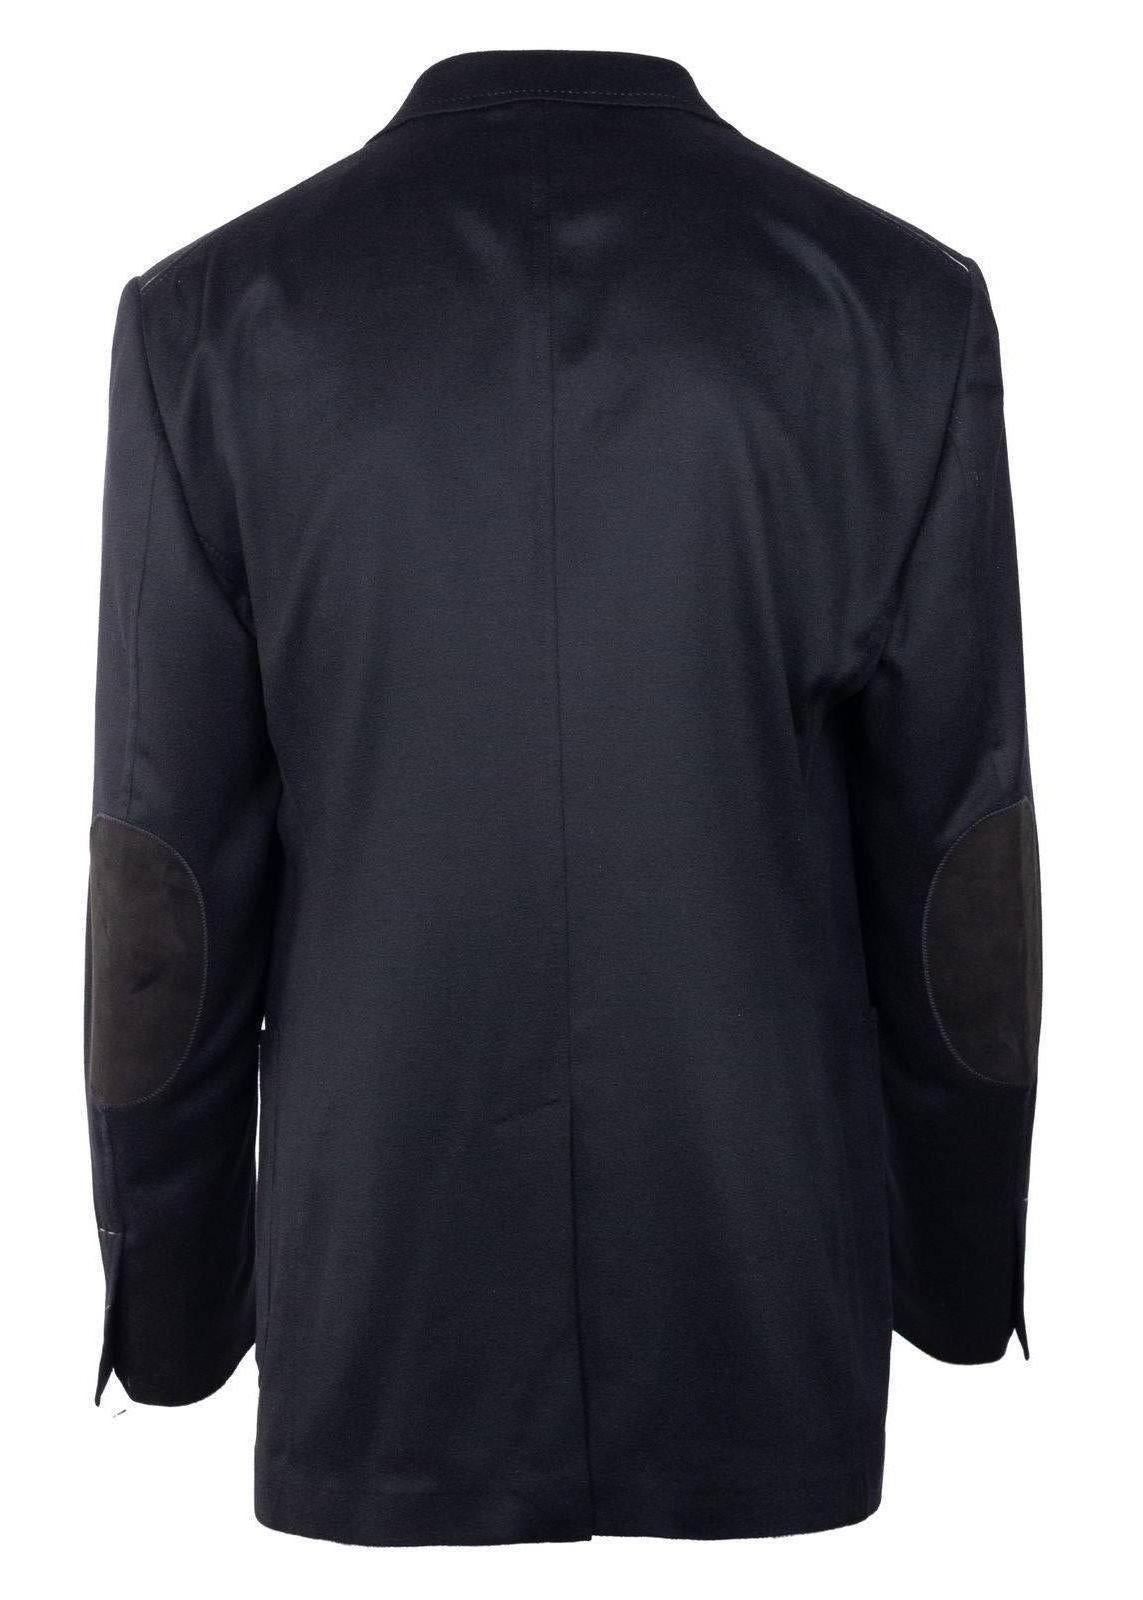 Men's Tom Ford Black 100% Cashmere Shelton Cardigan Sports Jacket Sz 56L/46L RTL$3820 For Sale